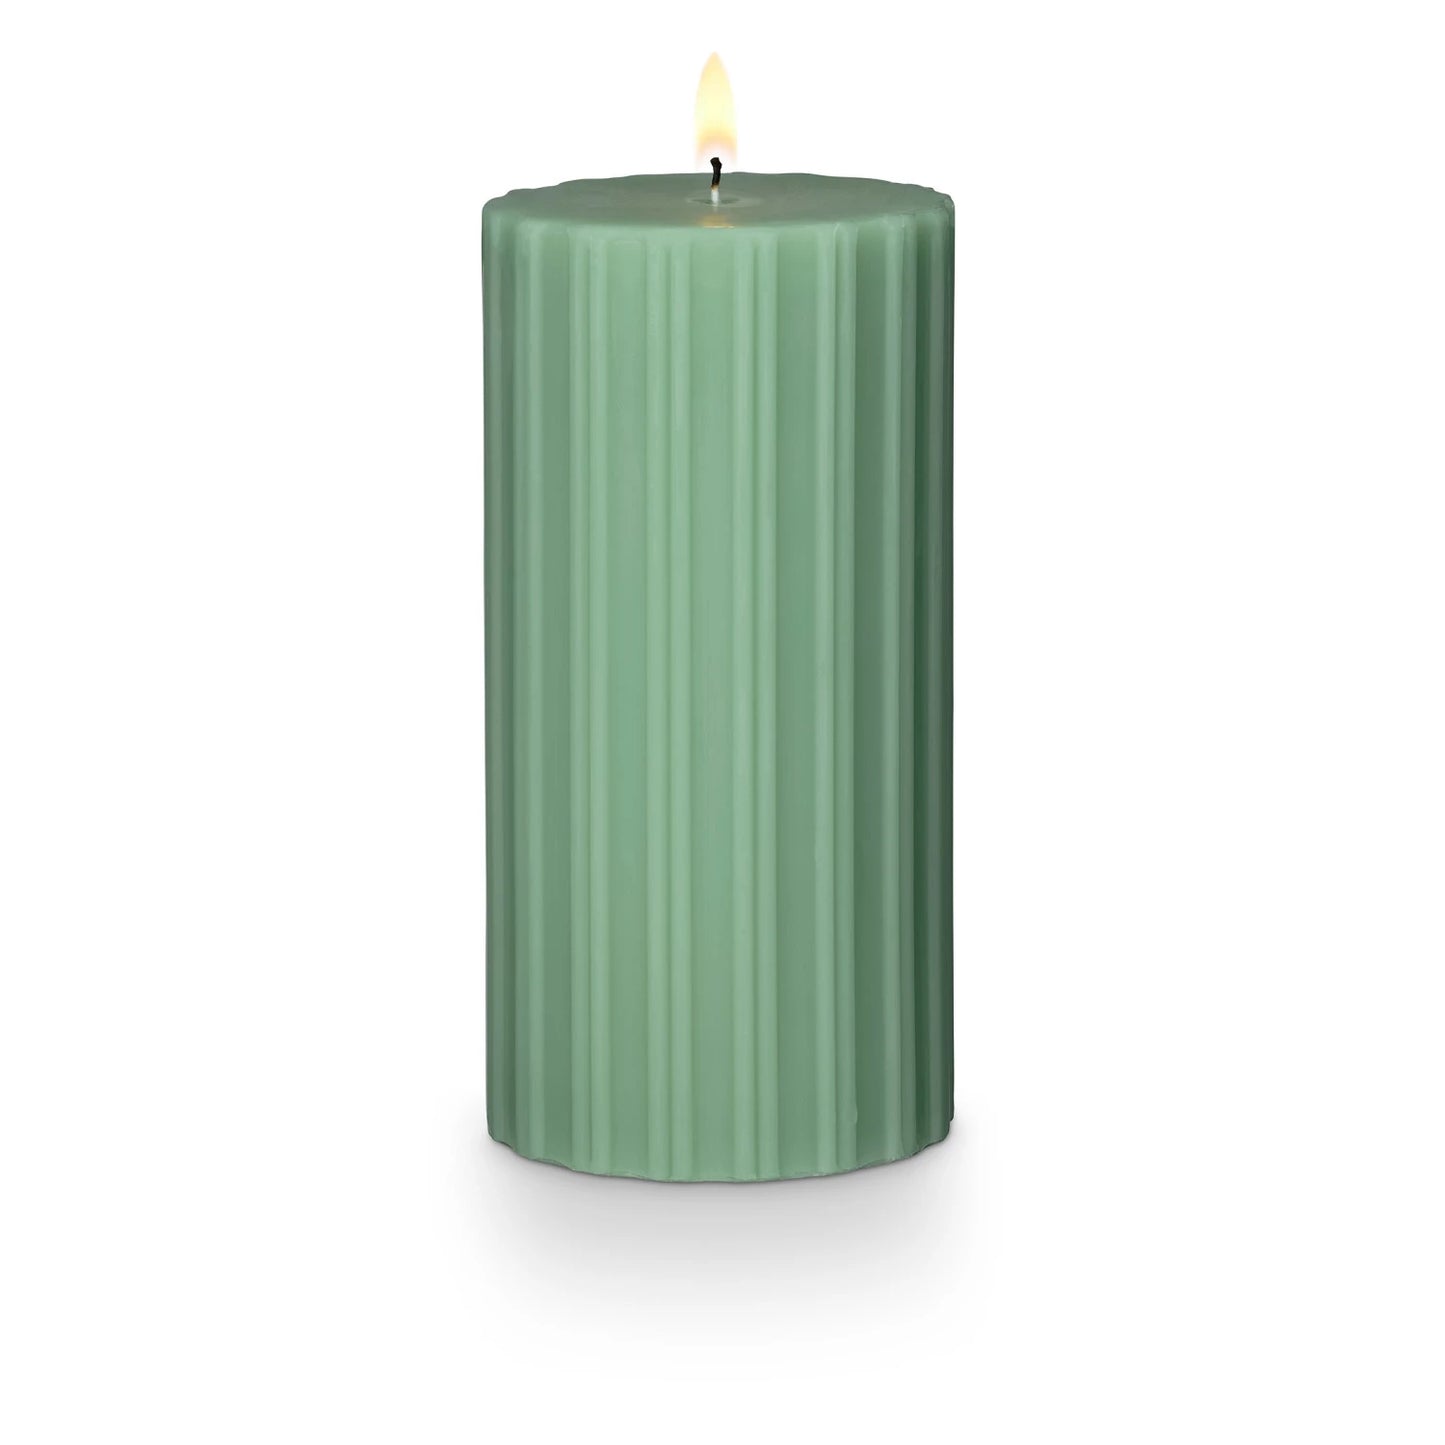 Illume - Medium Fragranced Pillar Candle - Hinoki Sage